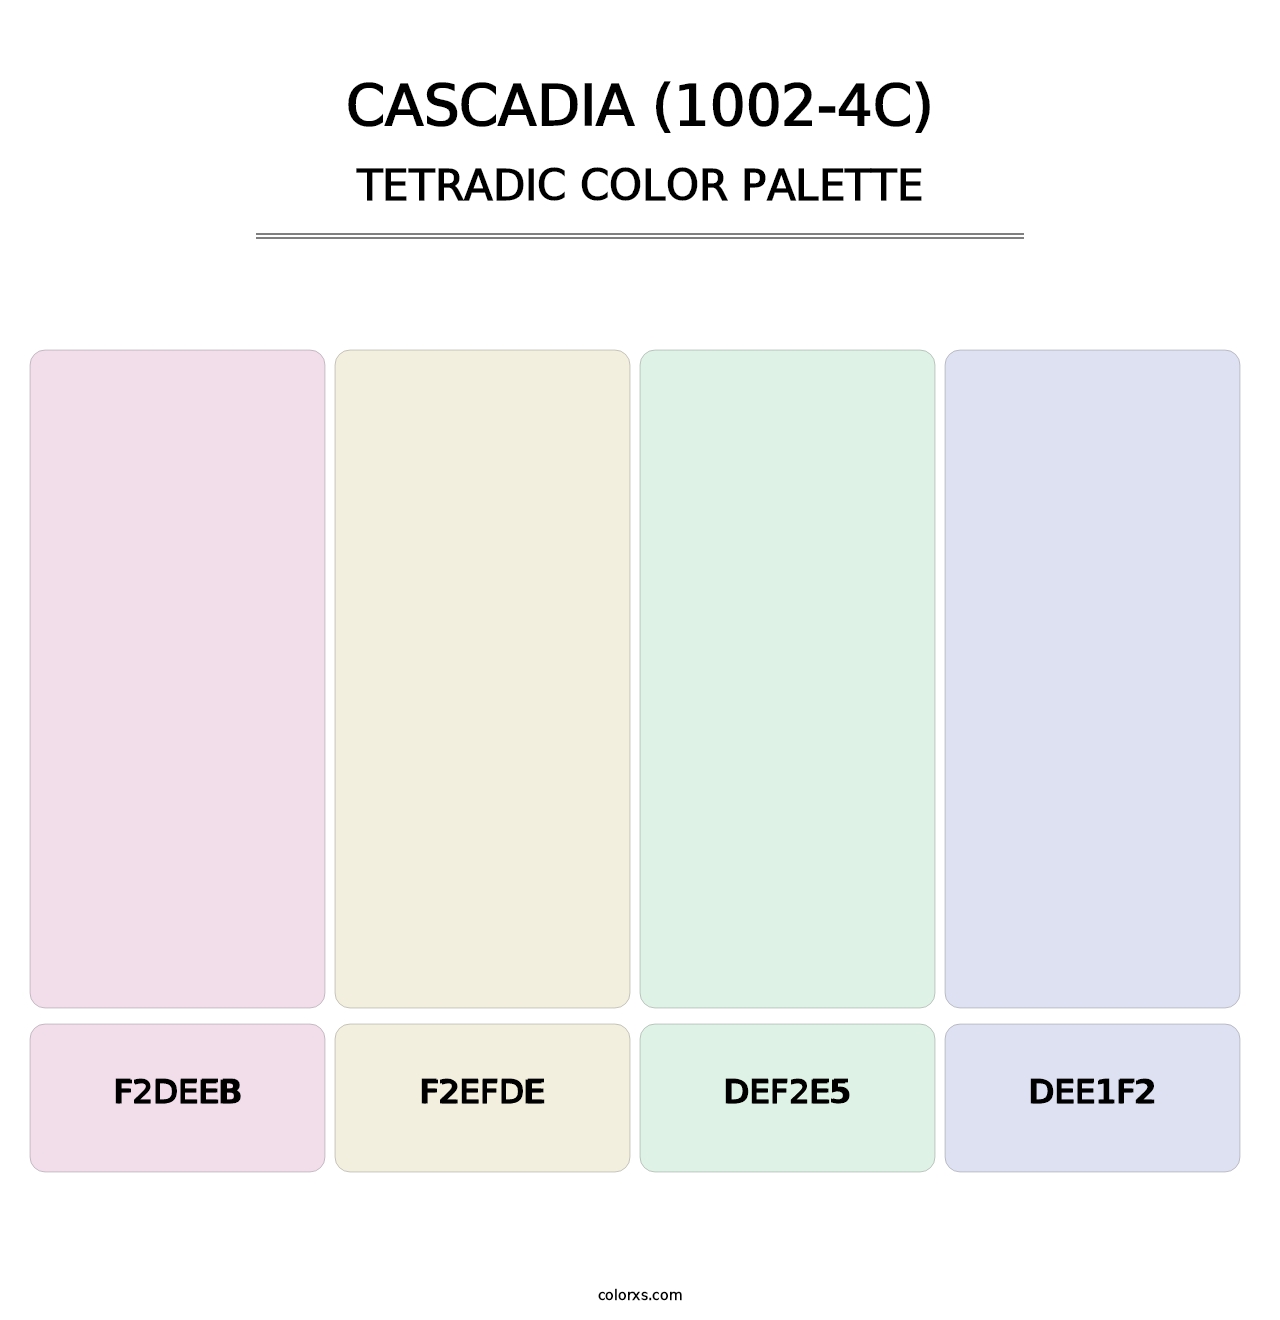 Cascadia (1002-4C) - Tetradic Color Palette